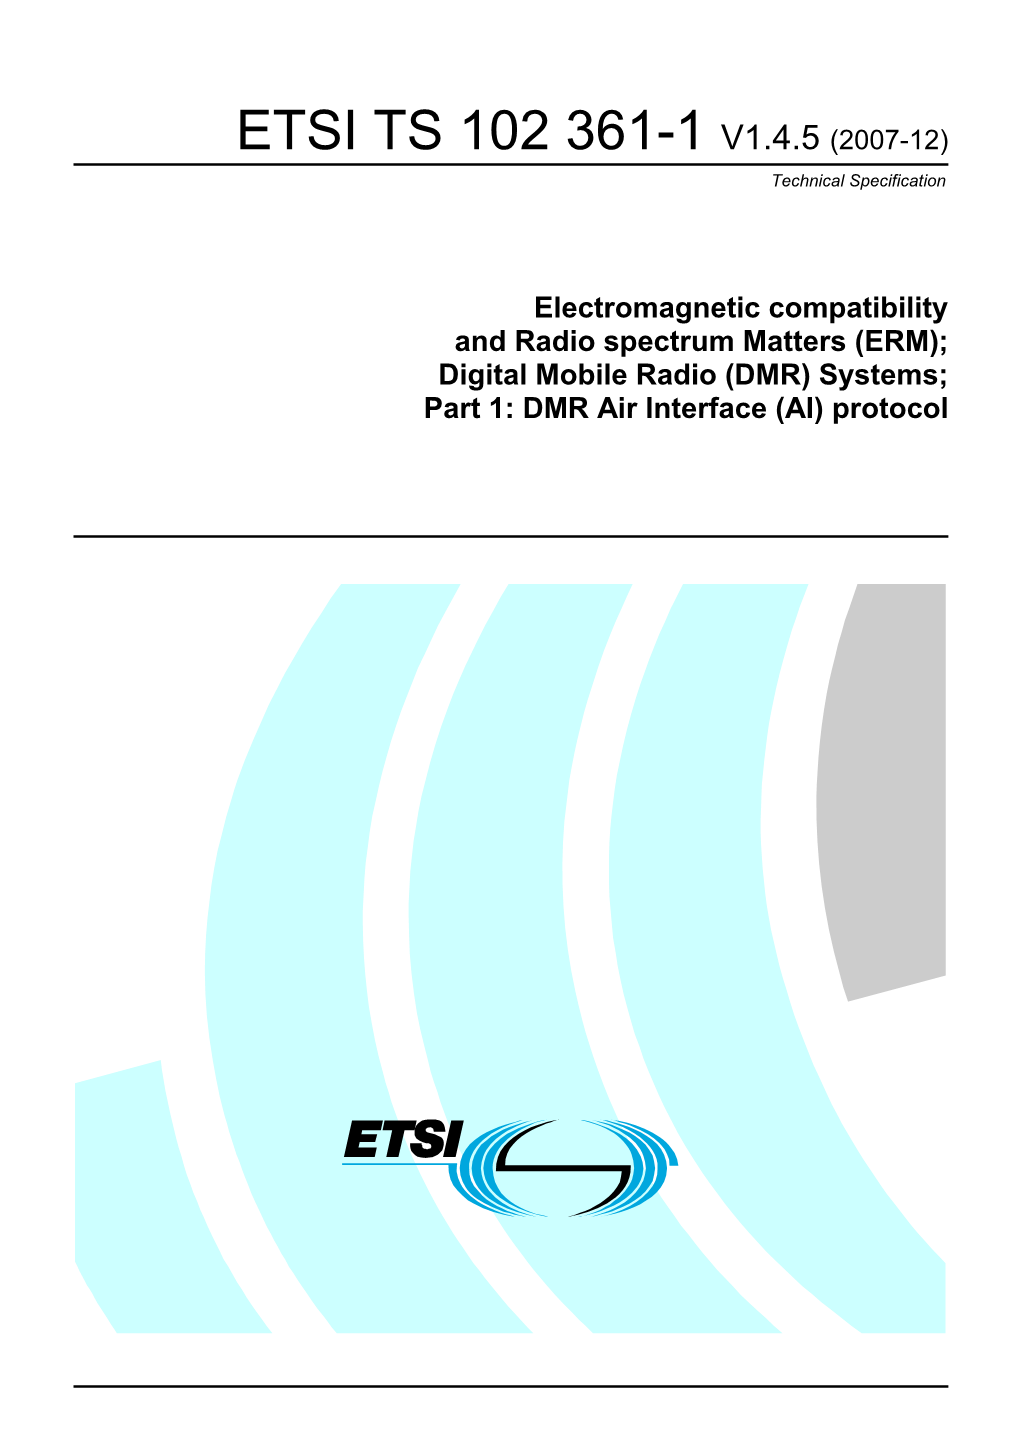 TS 102 361-1 V1.4.5 (2007-12) Technical Specification